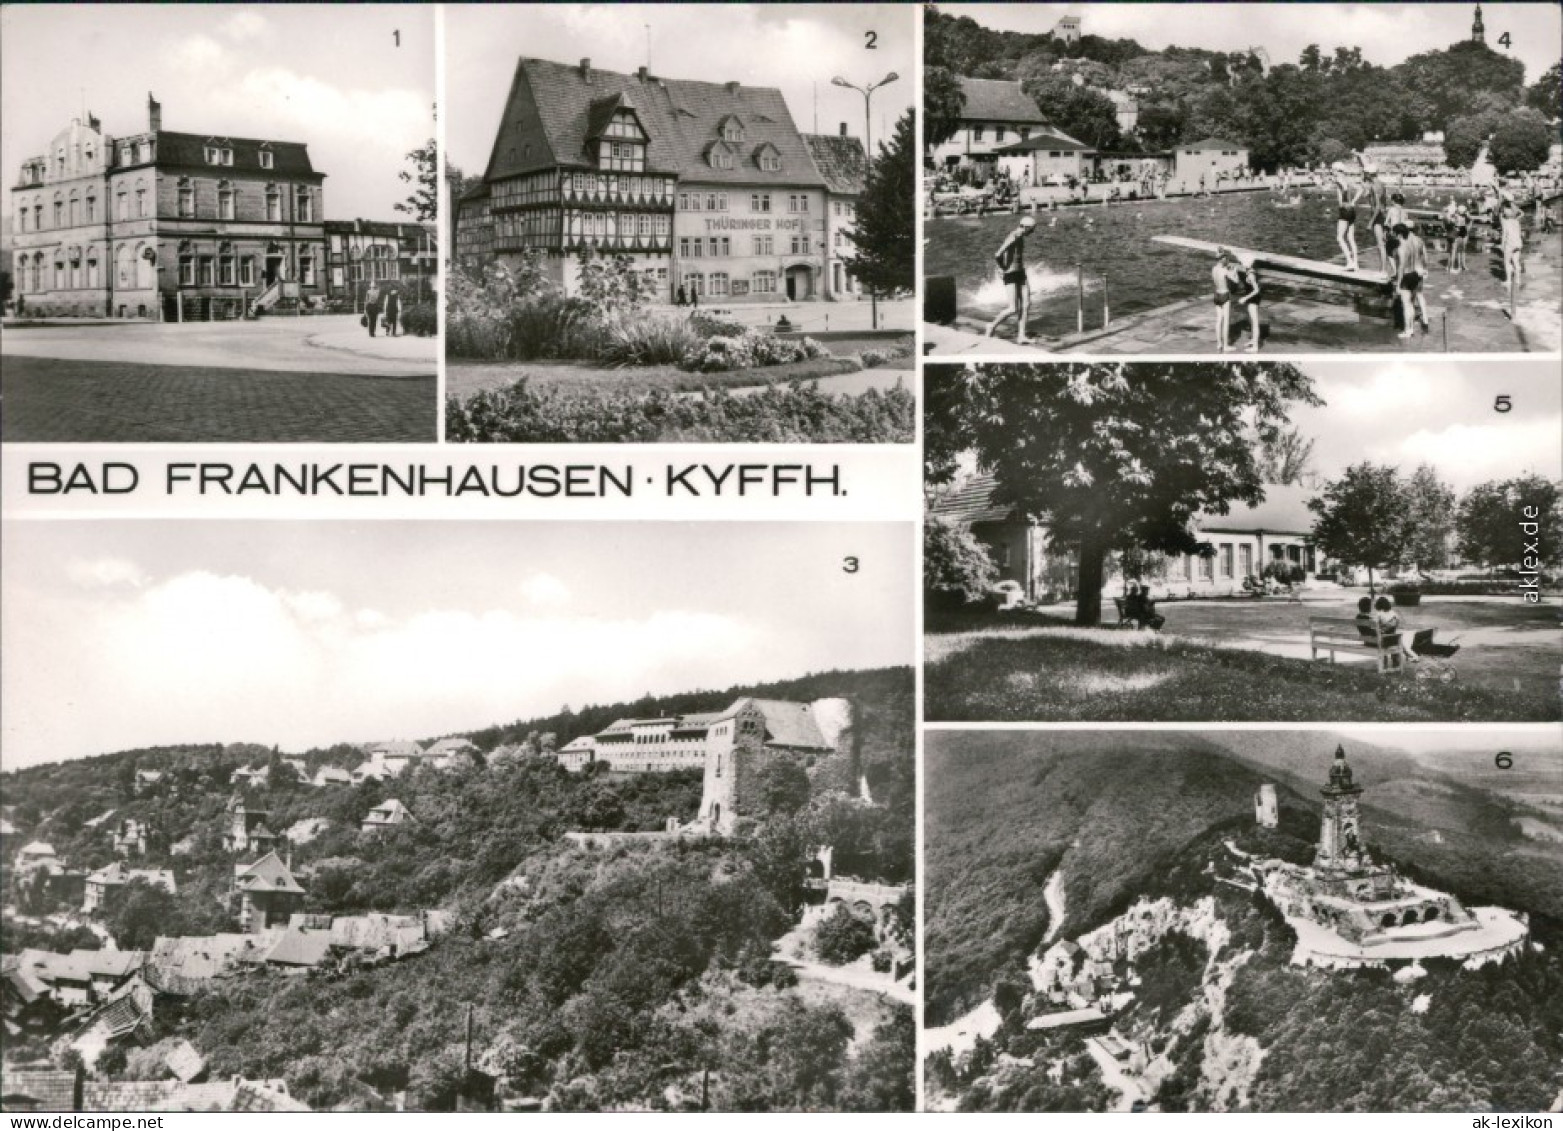 Bad Frankenhausen Jugendherberge, Apotheke, Hausmannsturm Kindersanatorium 1982 - Kyffhäuser